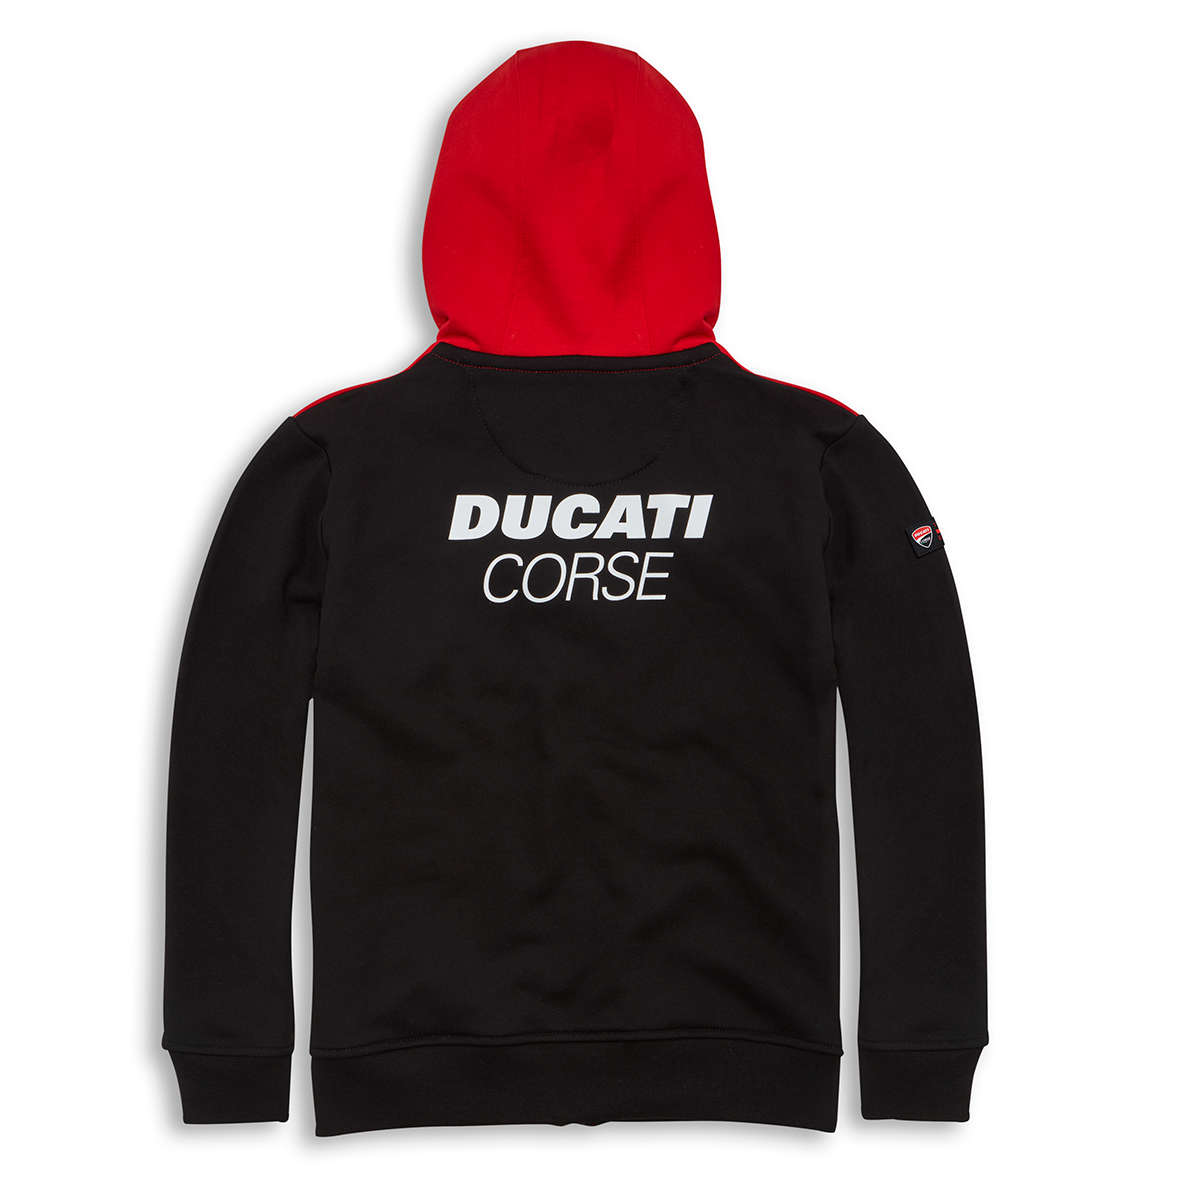 Ducati Corse Track Kid's Sweatshirt